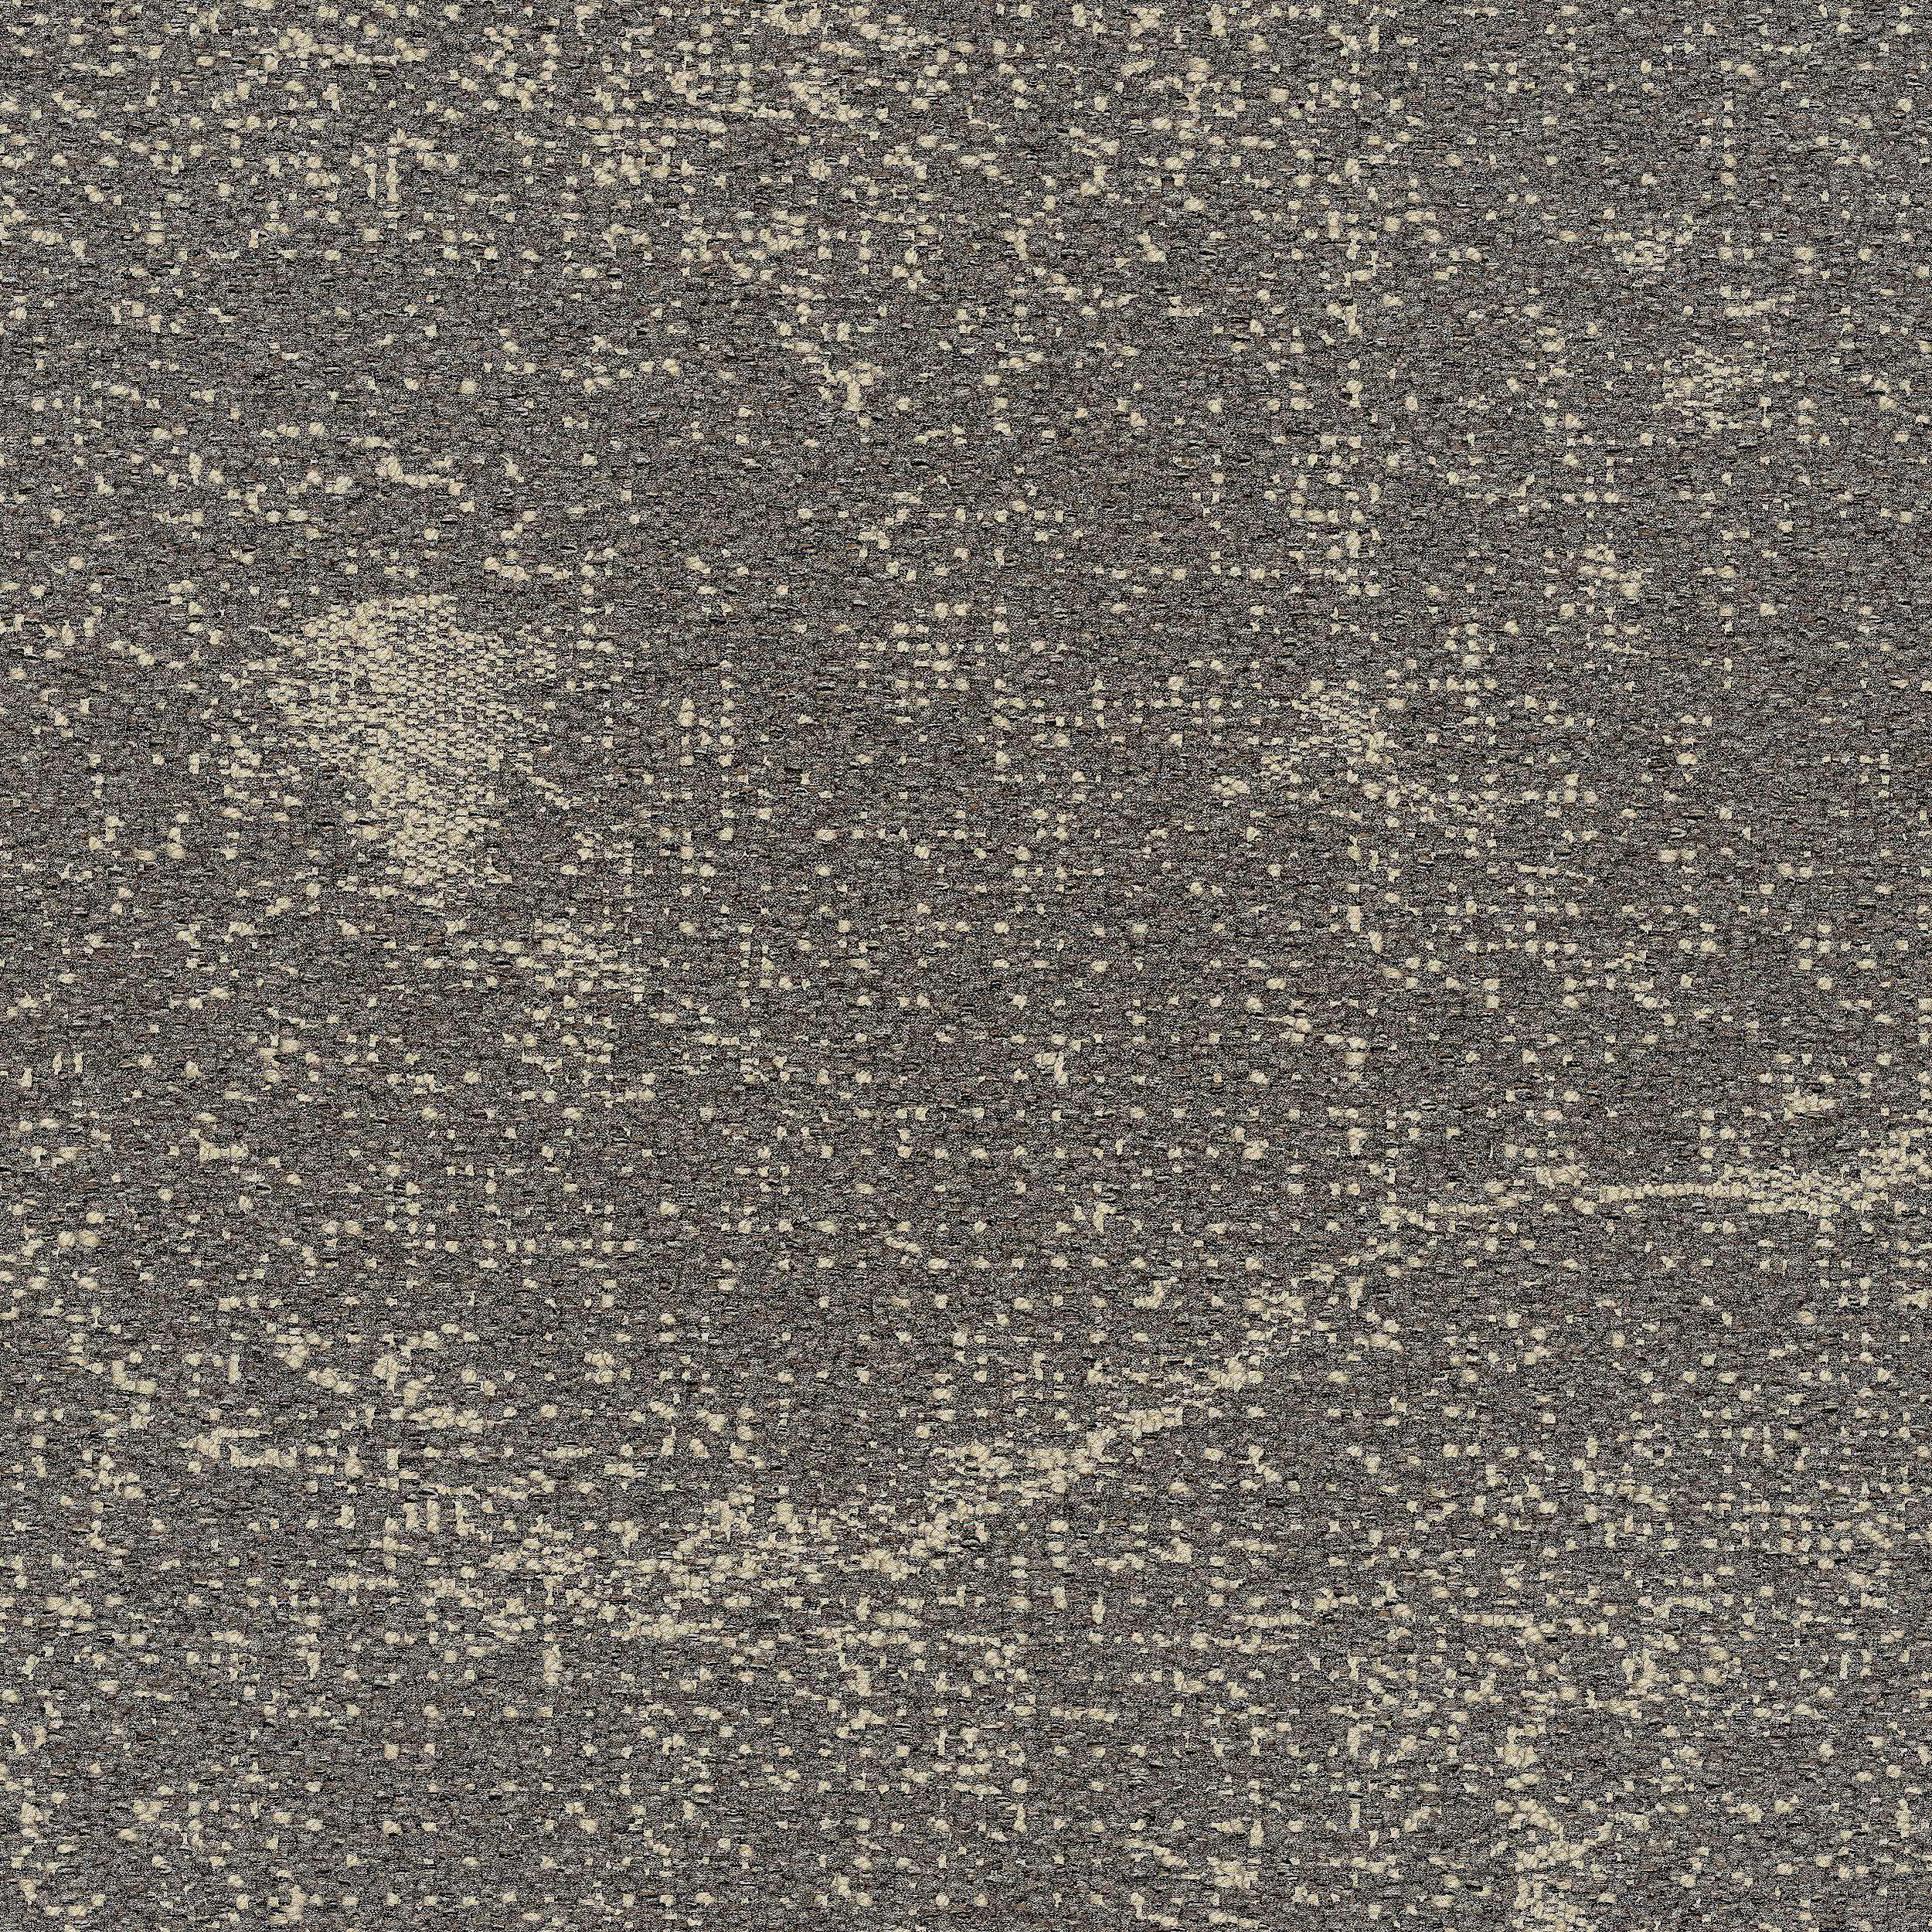 DL907: Commercial Carpet Tile by Interface